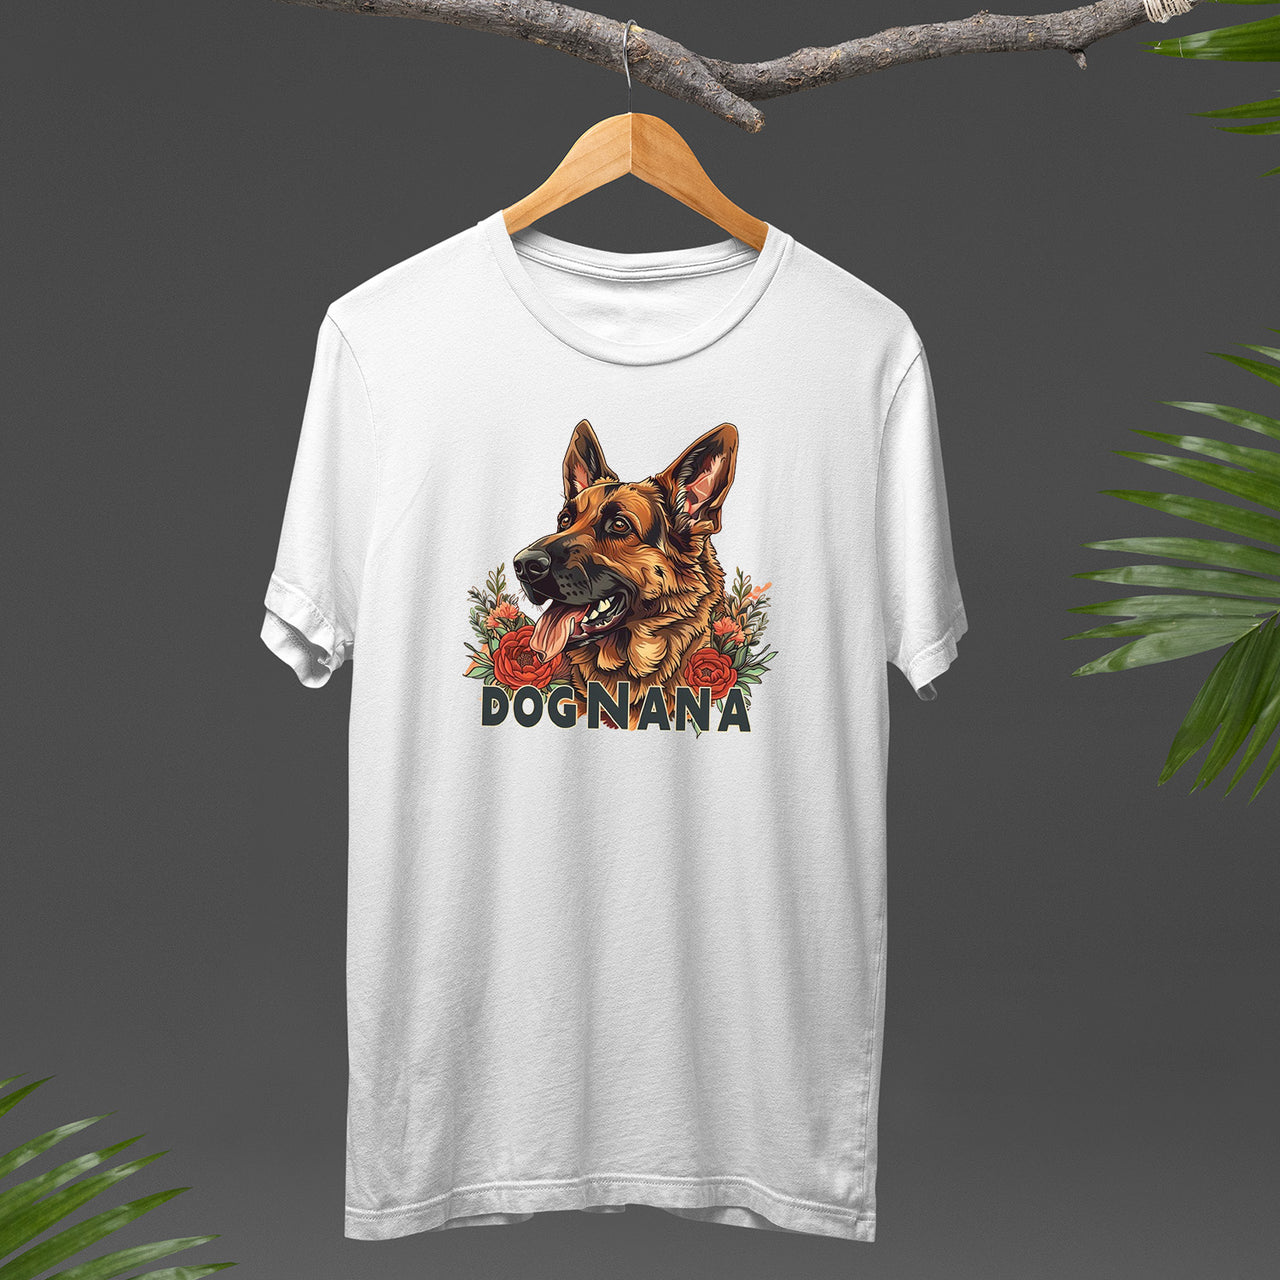 German Shepherd Dog T-shirt, Pet Lover Shirt, Dog Lover Shirt, Dog Nana T-Shirt T-Shirt, Dog Owner Shirt, Gift For Dog Grandma, Funny Dog Shirts, Women Dog T-Shirt, Mother's Day Gift, Dog Lover Wife Gifts, Dog Shirt